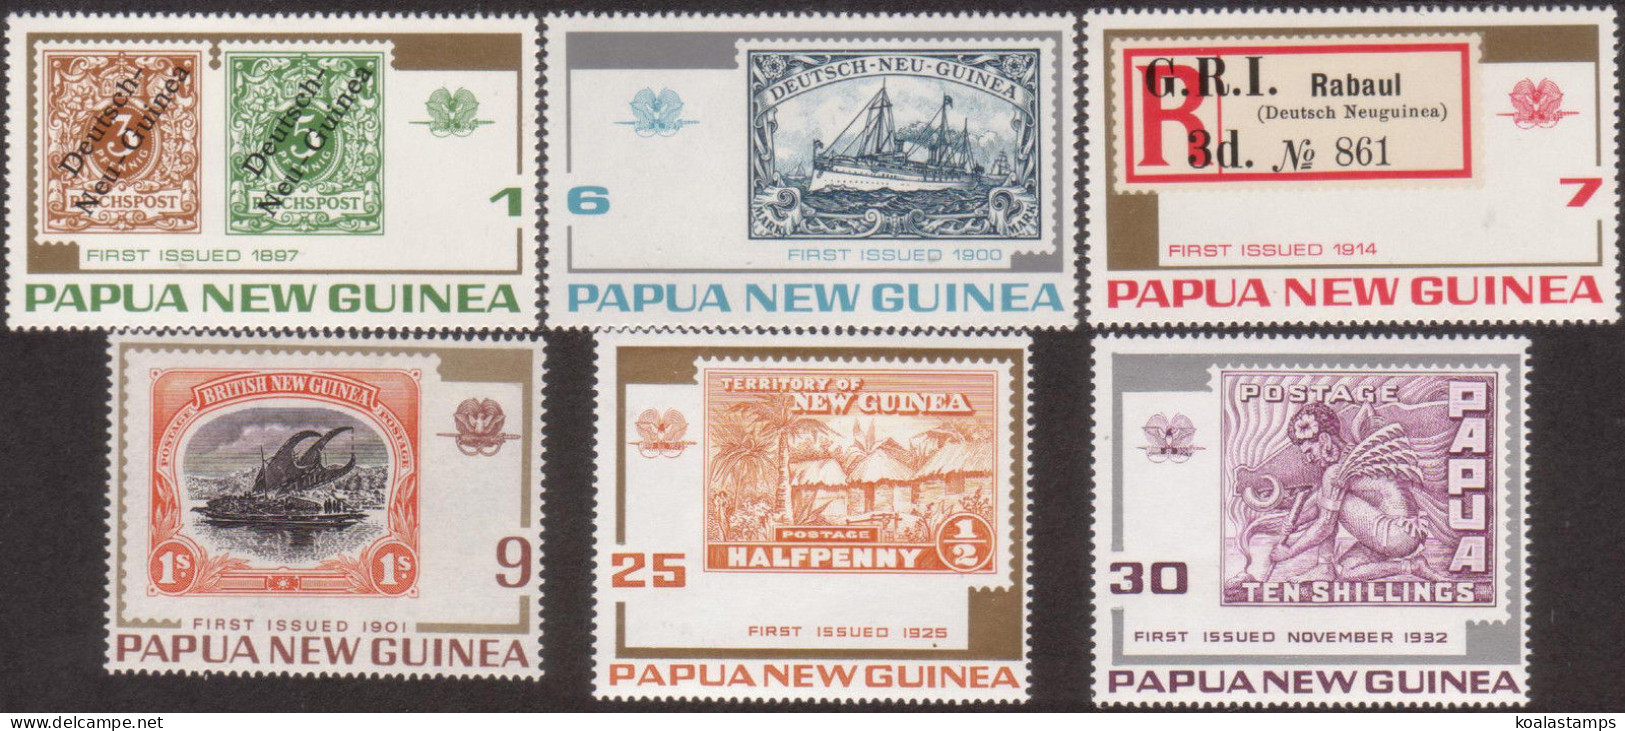 Papua New Guinea 1973 SG260-265 Stamp Anniversaries Set MNH - Papua New Guinea